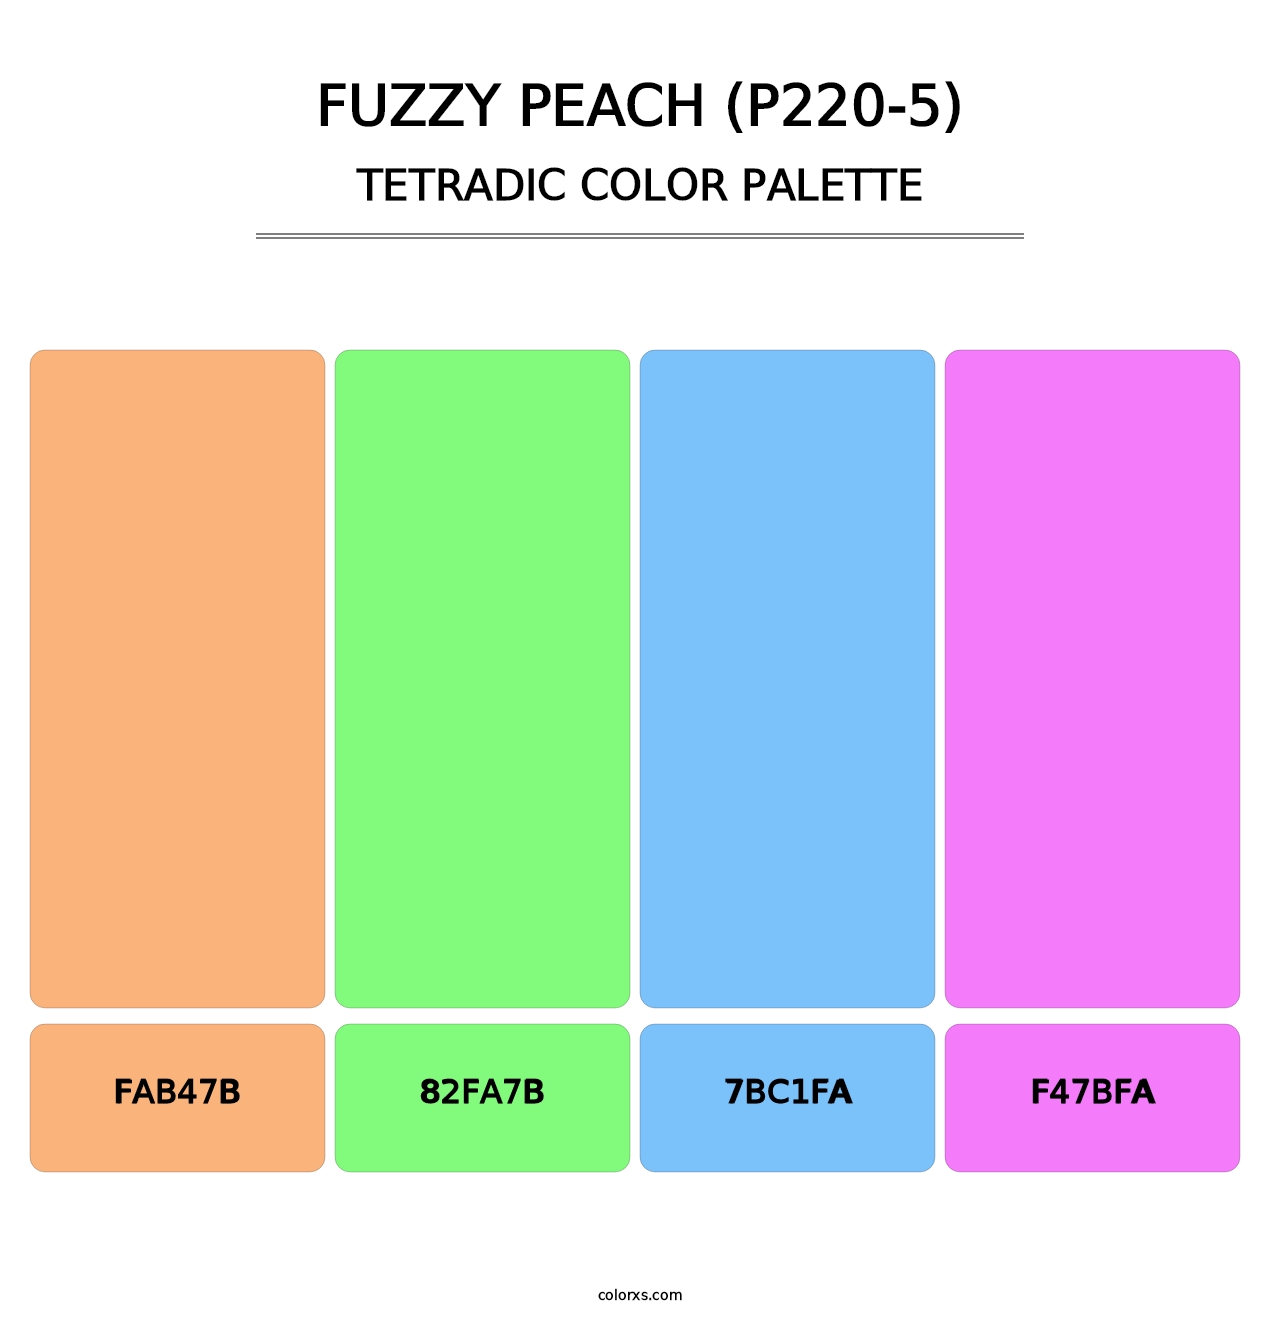 Fuzzy Peach (P220-5) - Tetradic Color Palette